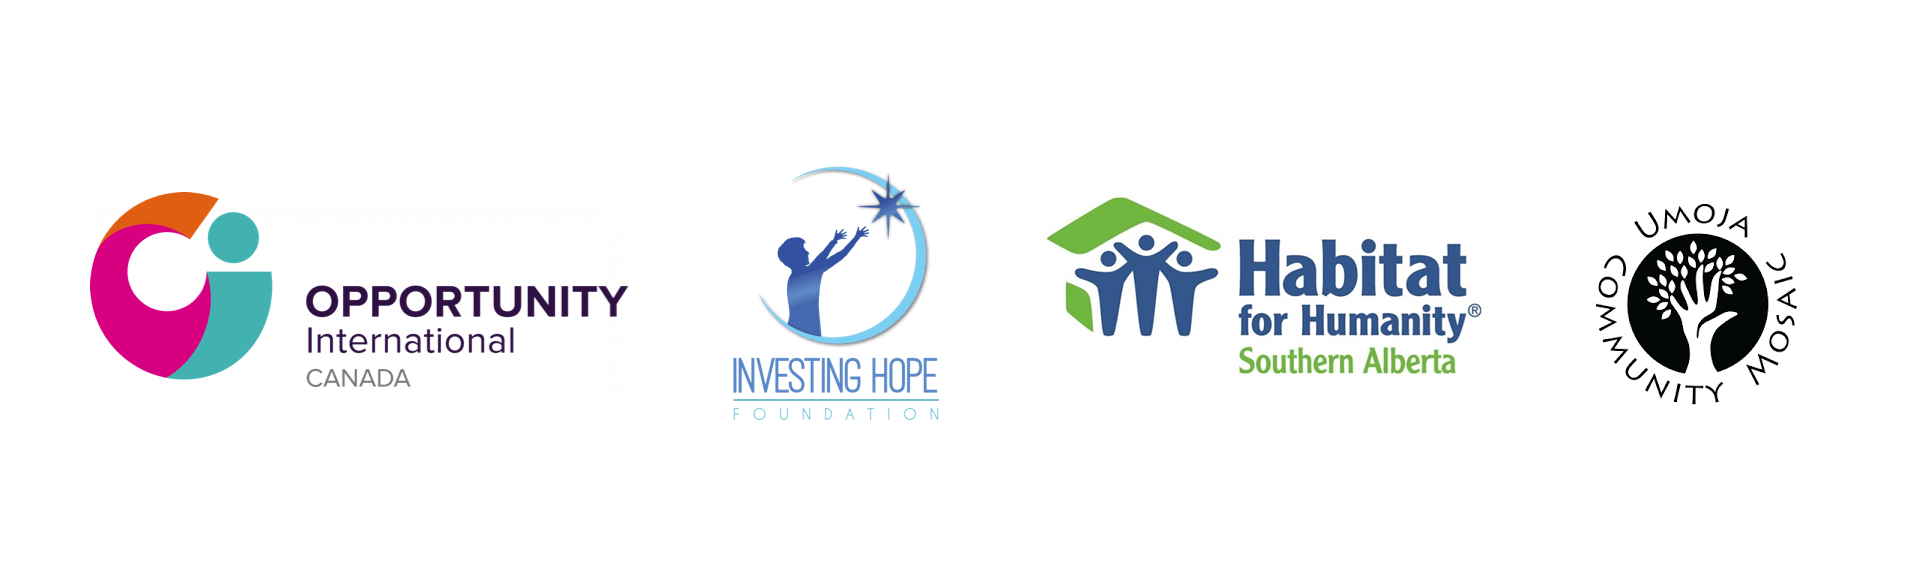 Charity Organization Logos